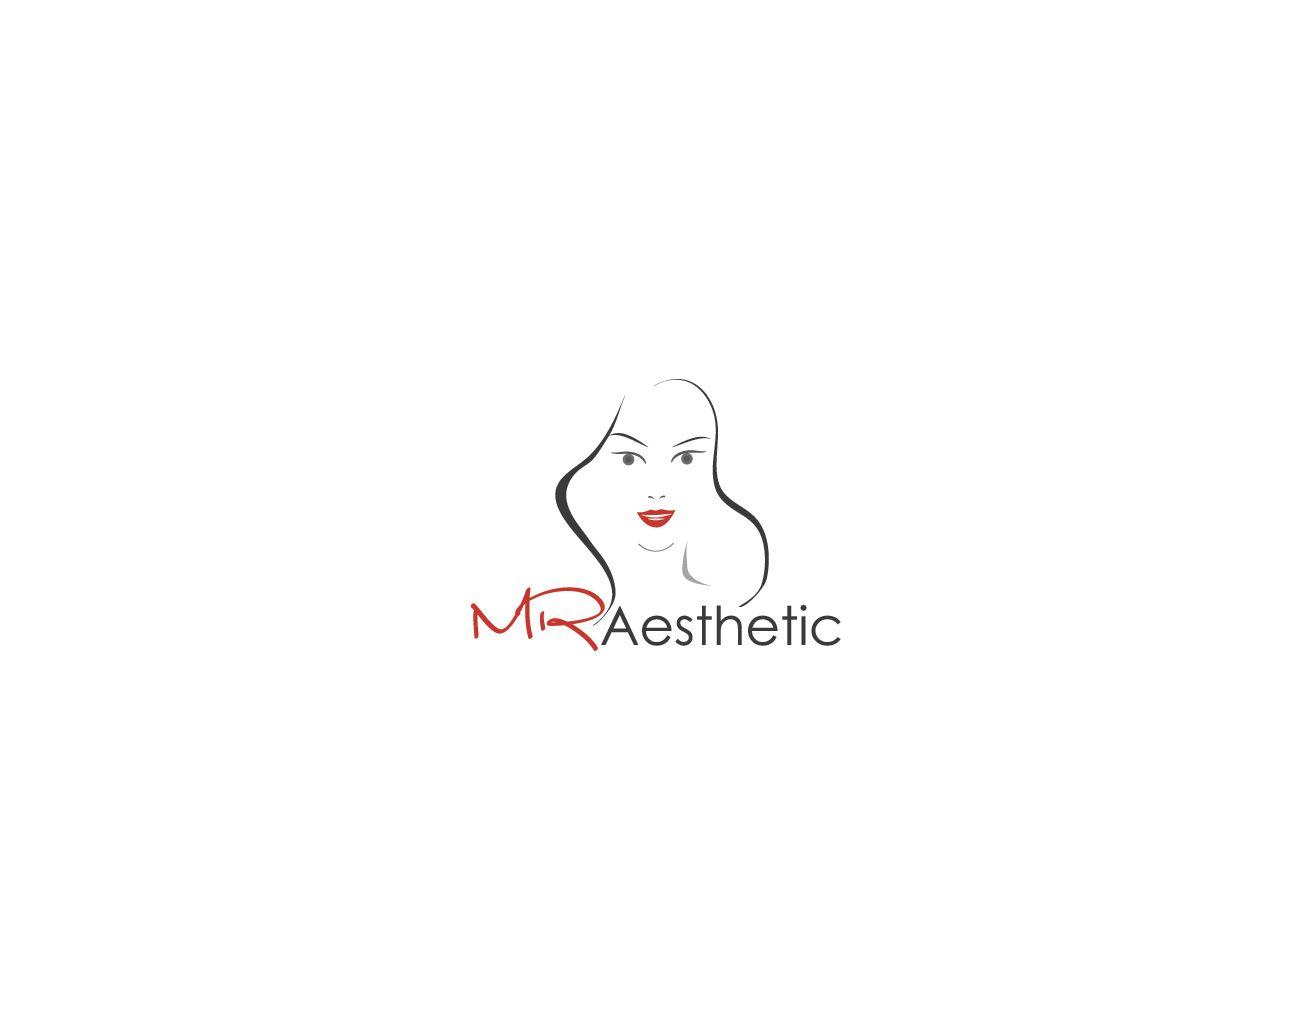 Aesthetic Logo - Modern, Professional, Business Logo Design for M.R Aesthetic by ...